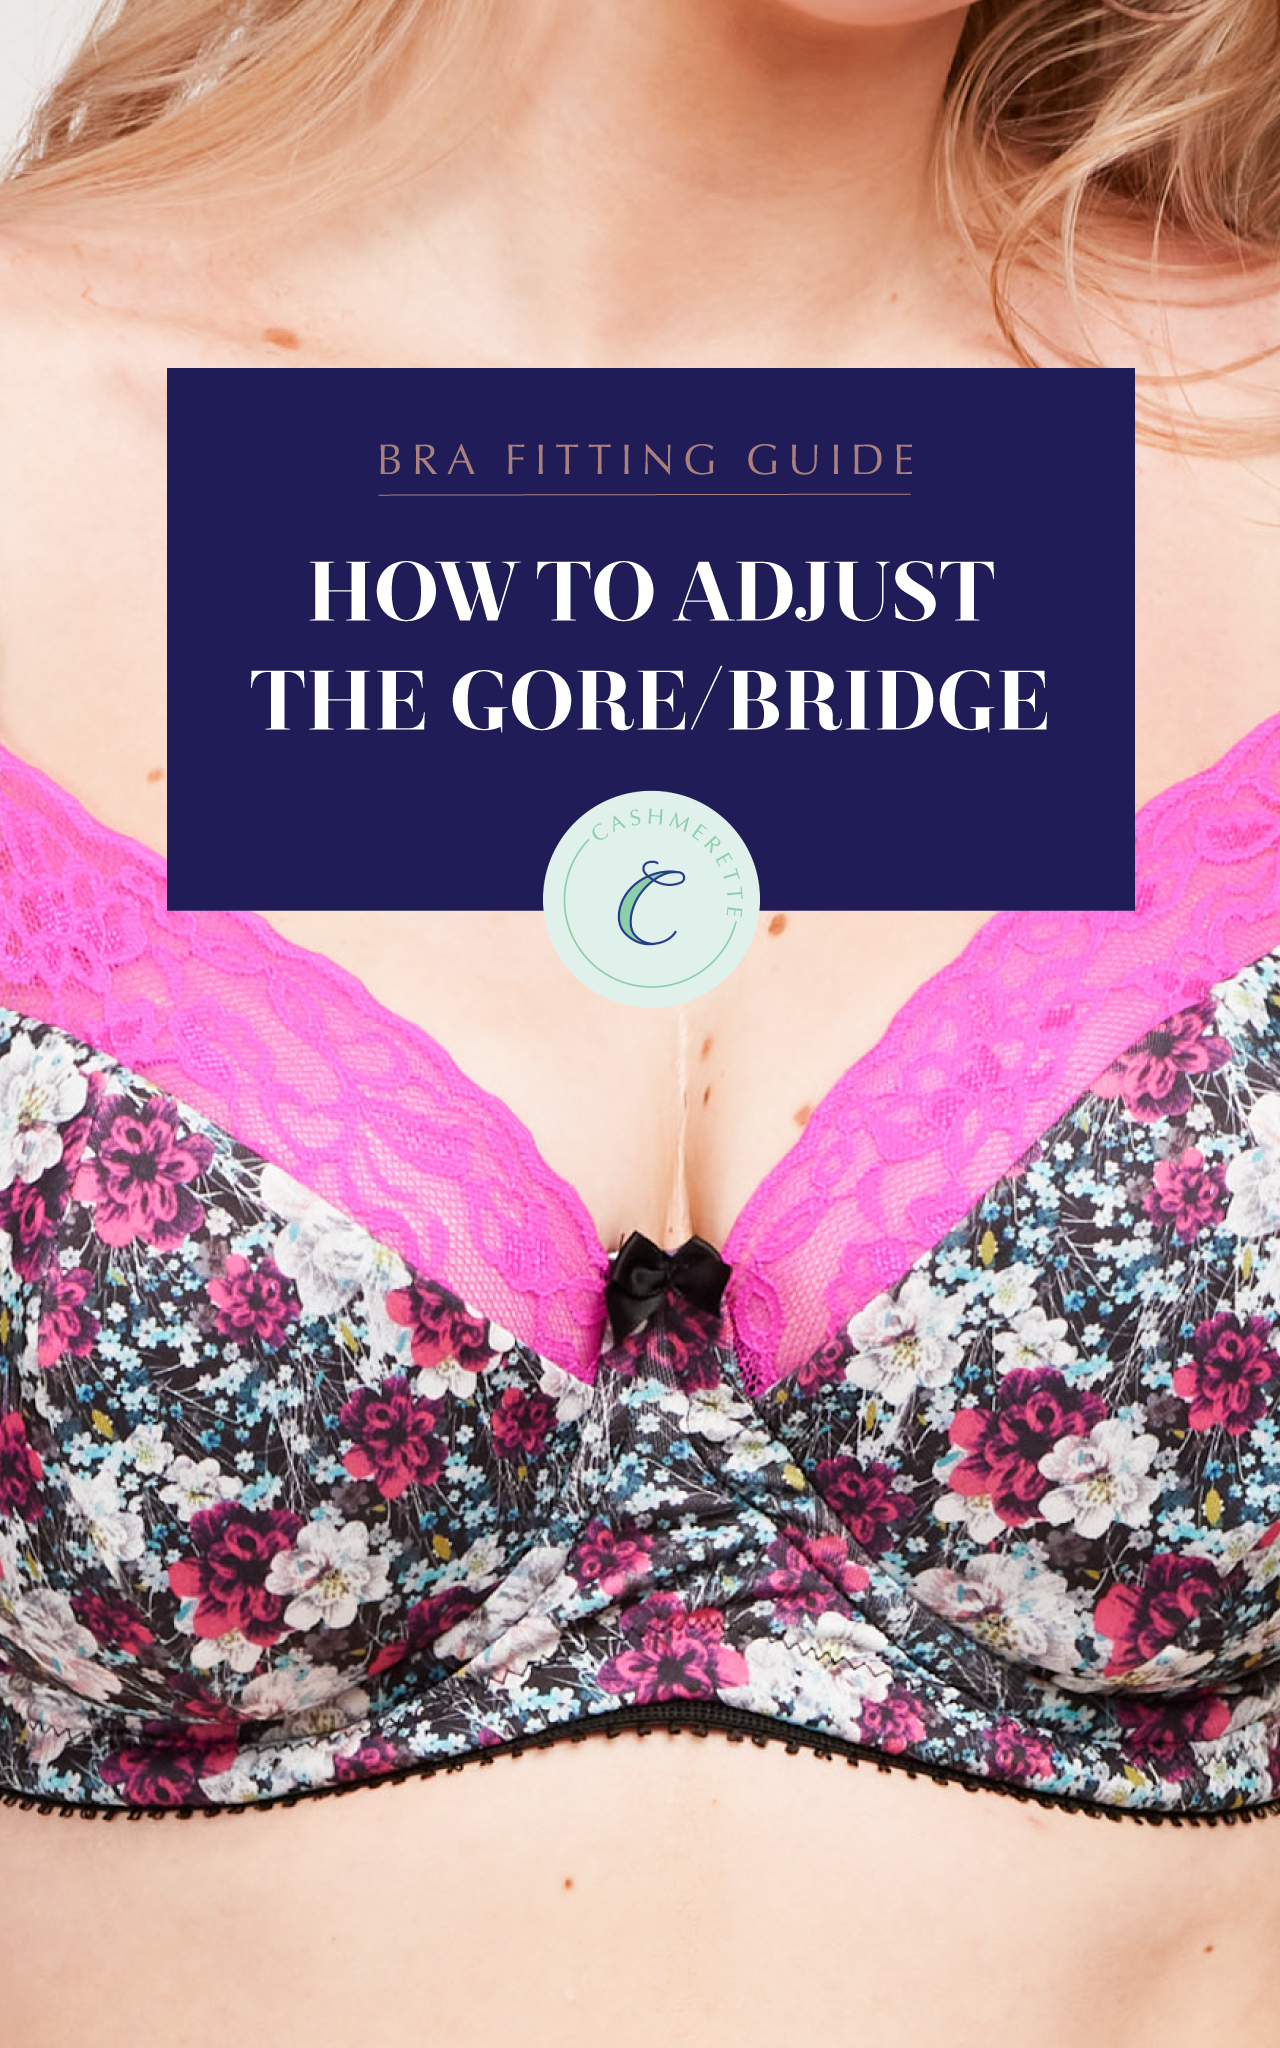 How to adjust the gore/bridge of a bra